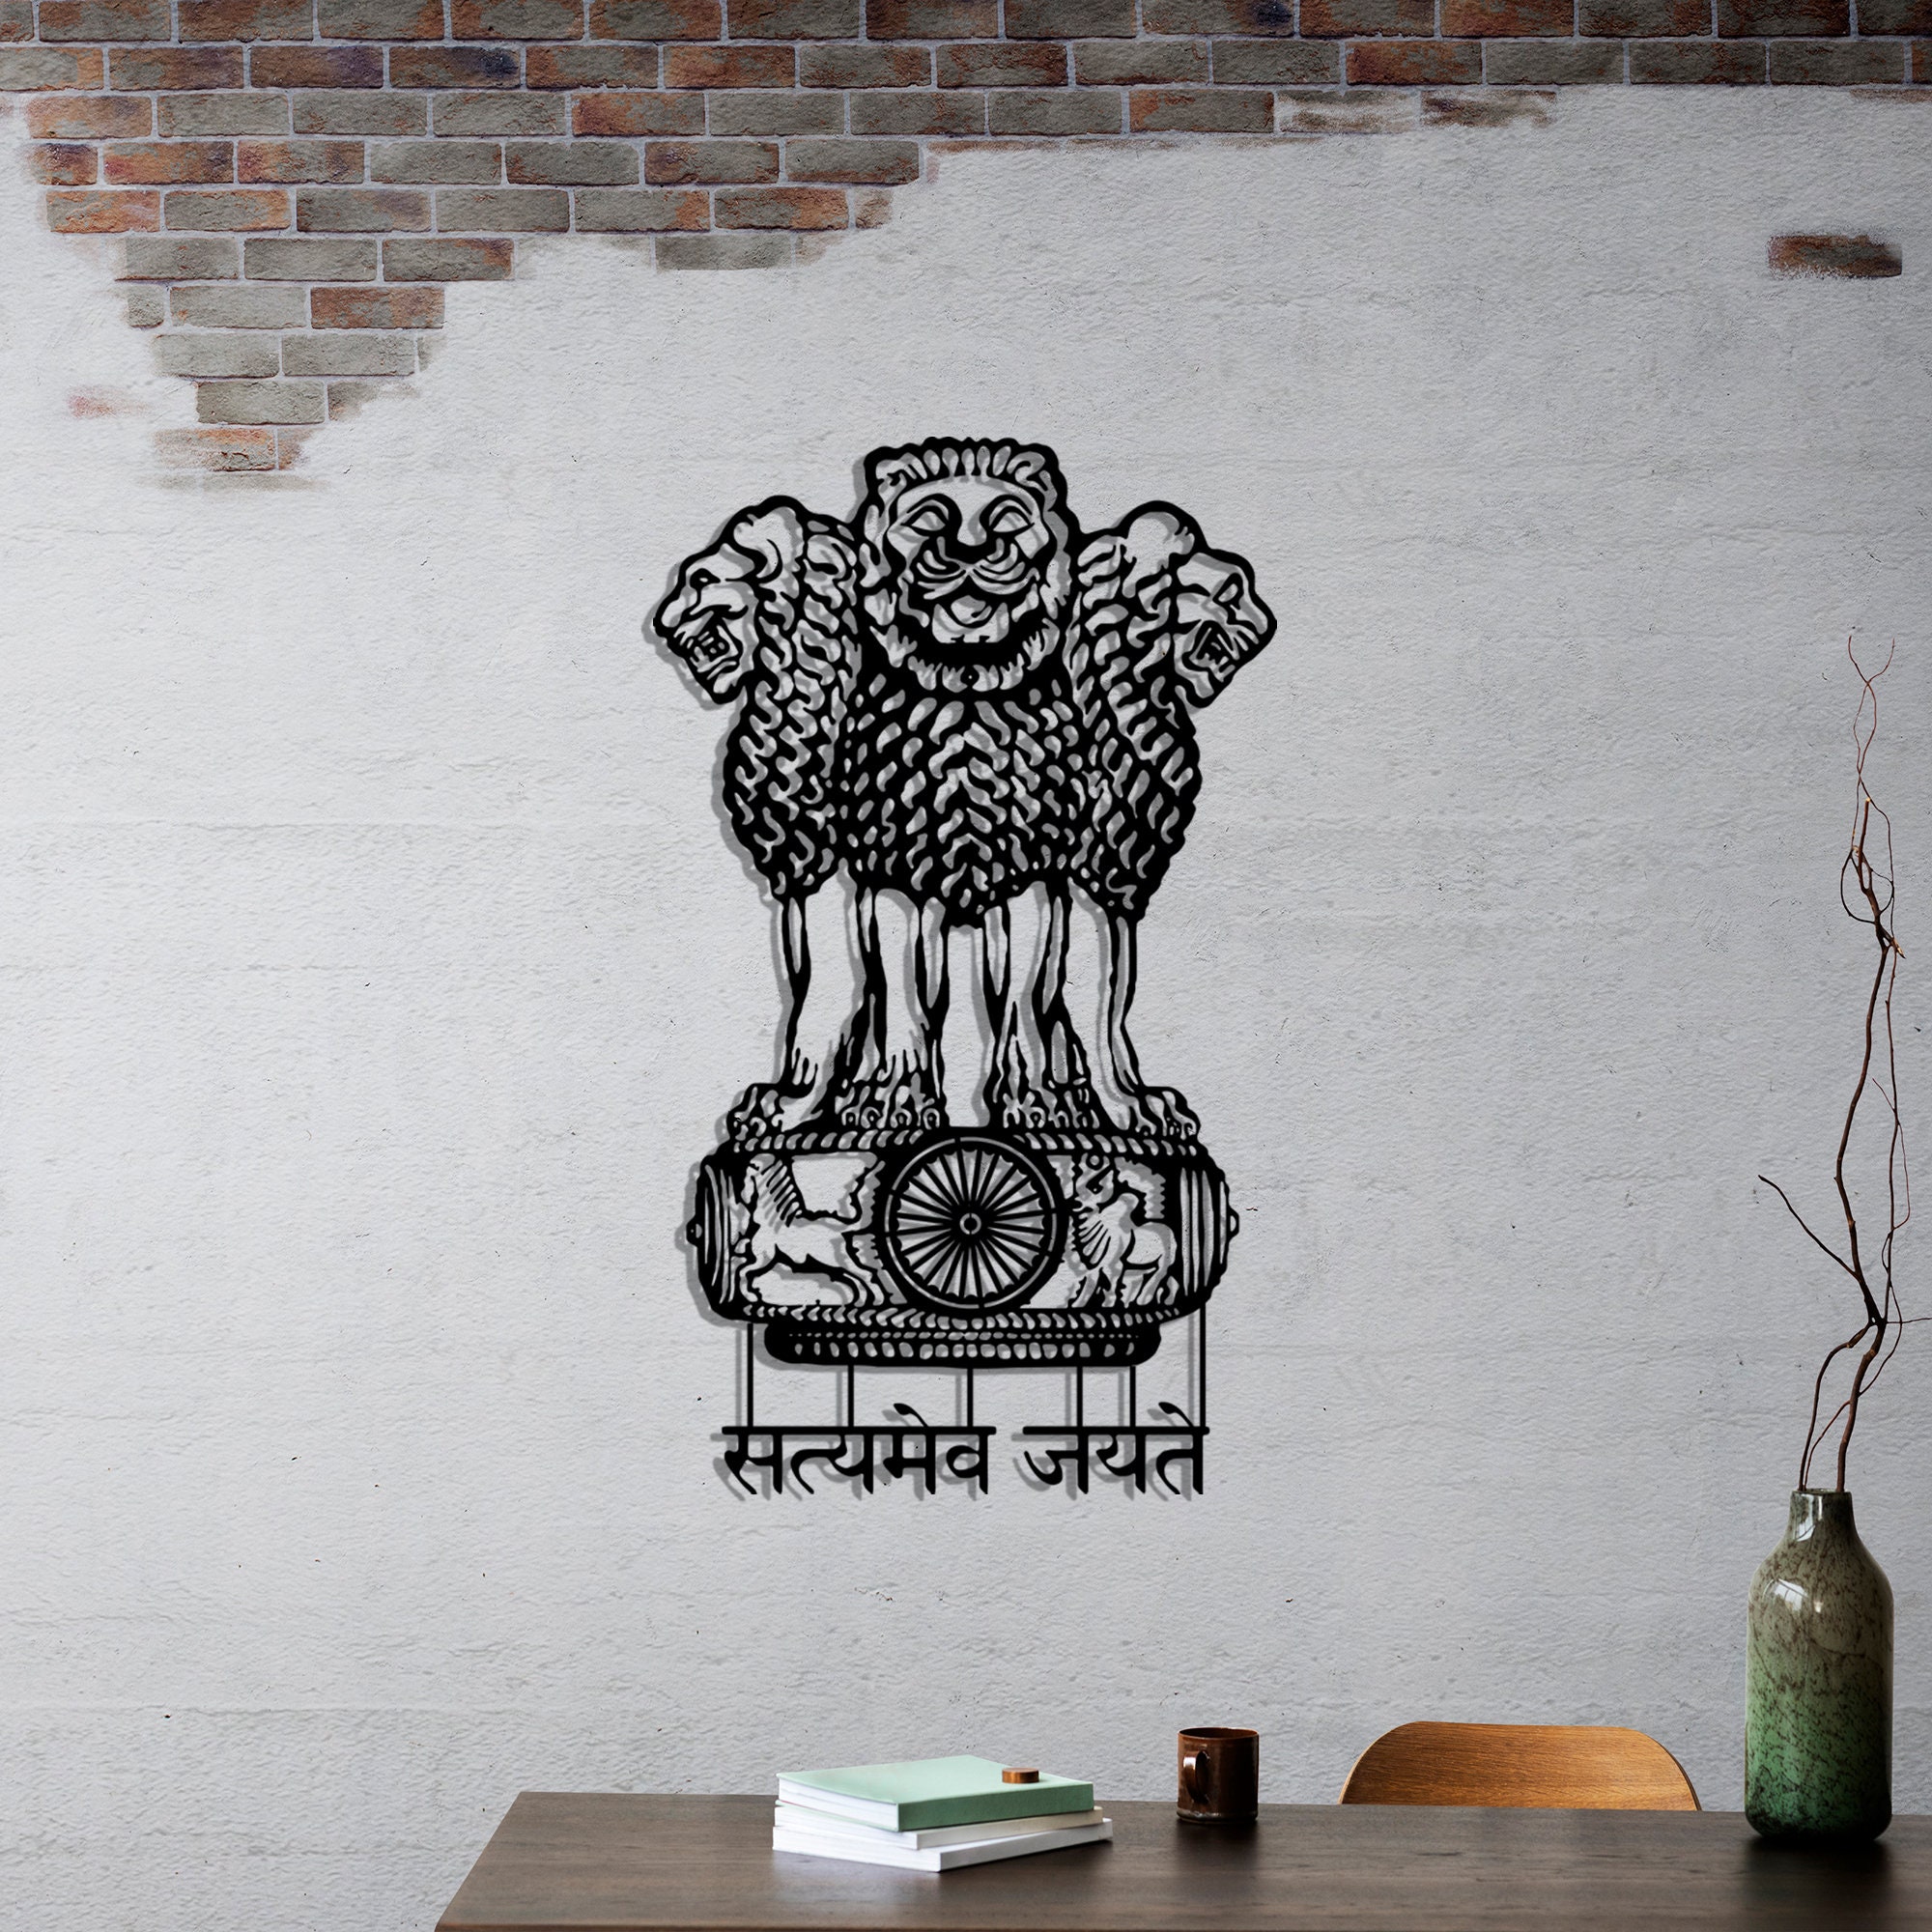 National Emblem of India. Drawing by Vishnu Pandit - Pixels